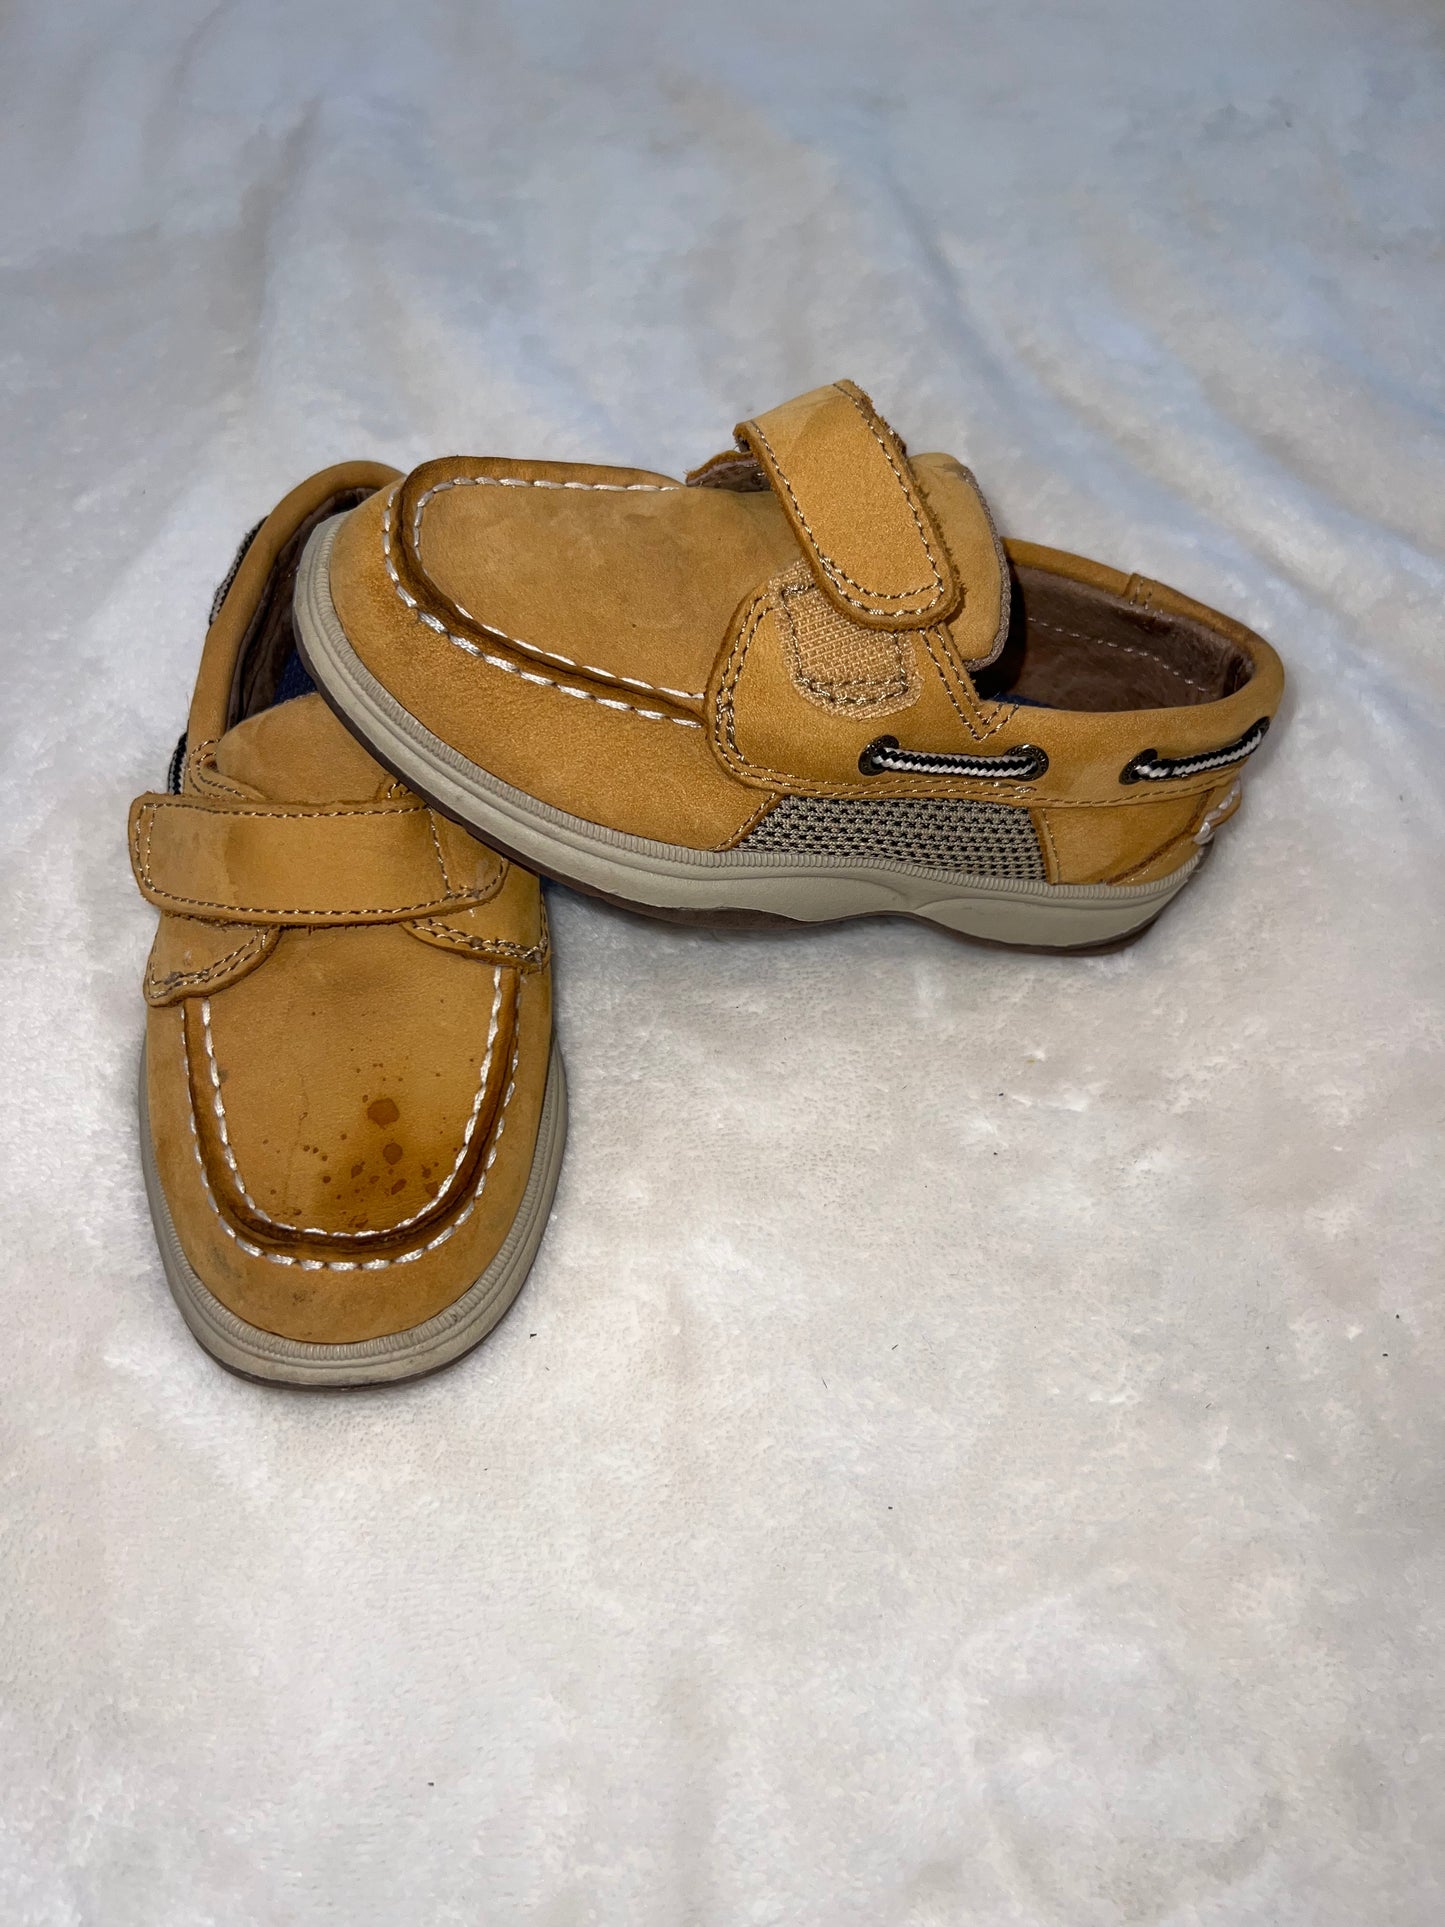 size 9 boys shoes, sperry light color